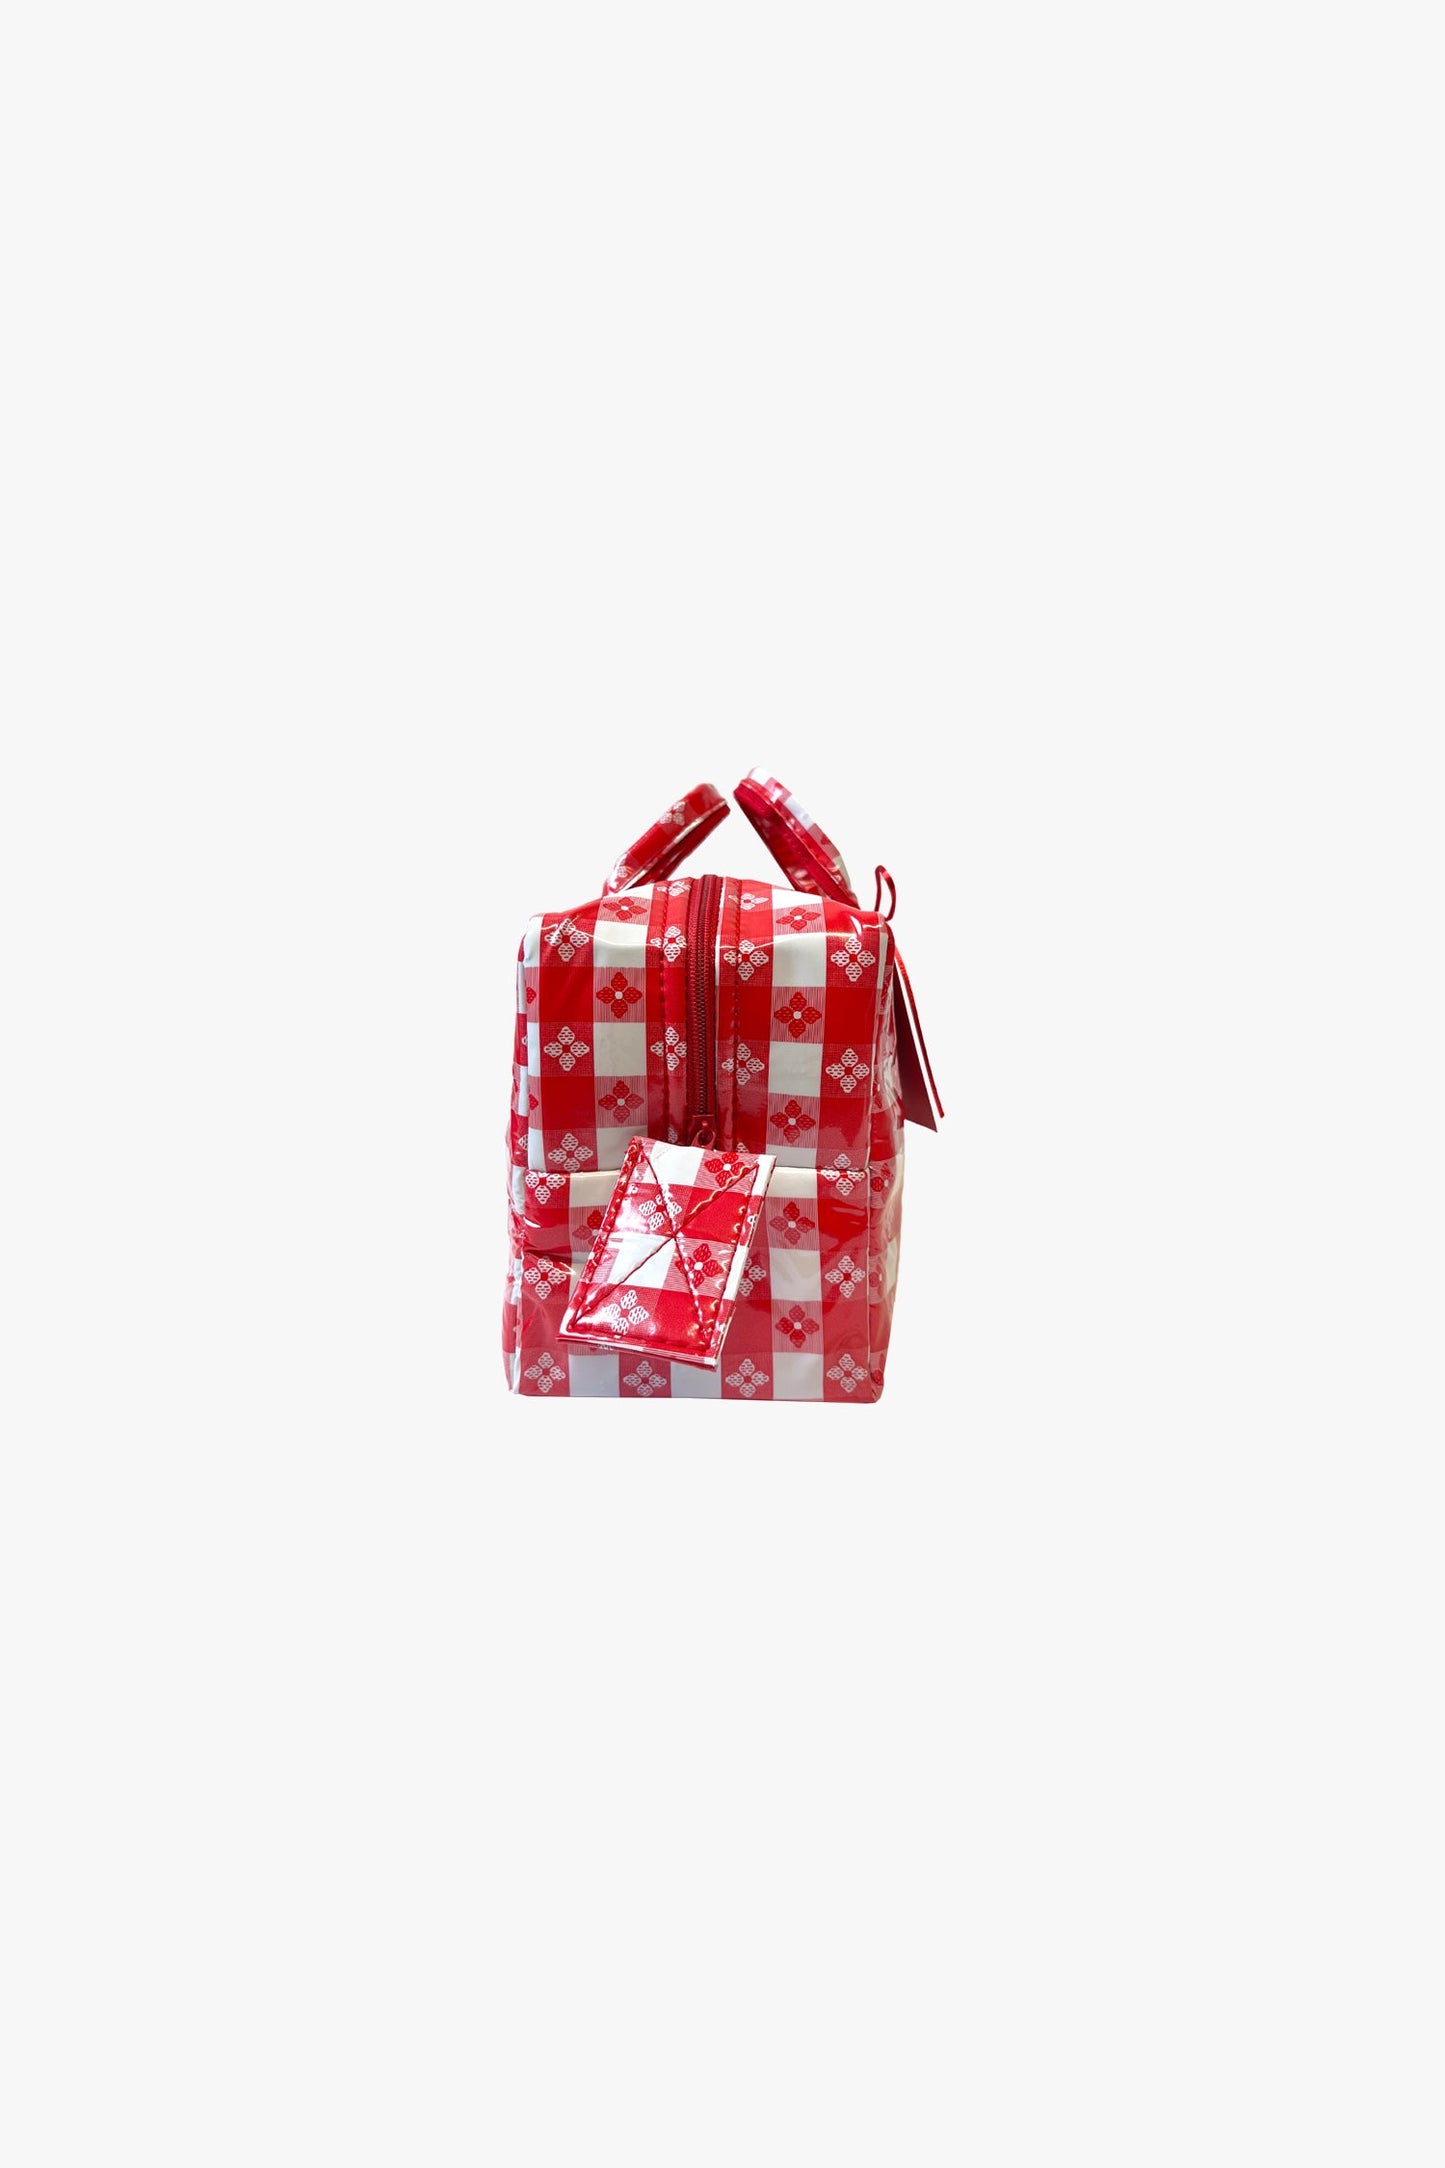 Ali Rapp for Anna Sui Medium Summer Picnic Bag